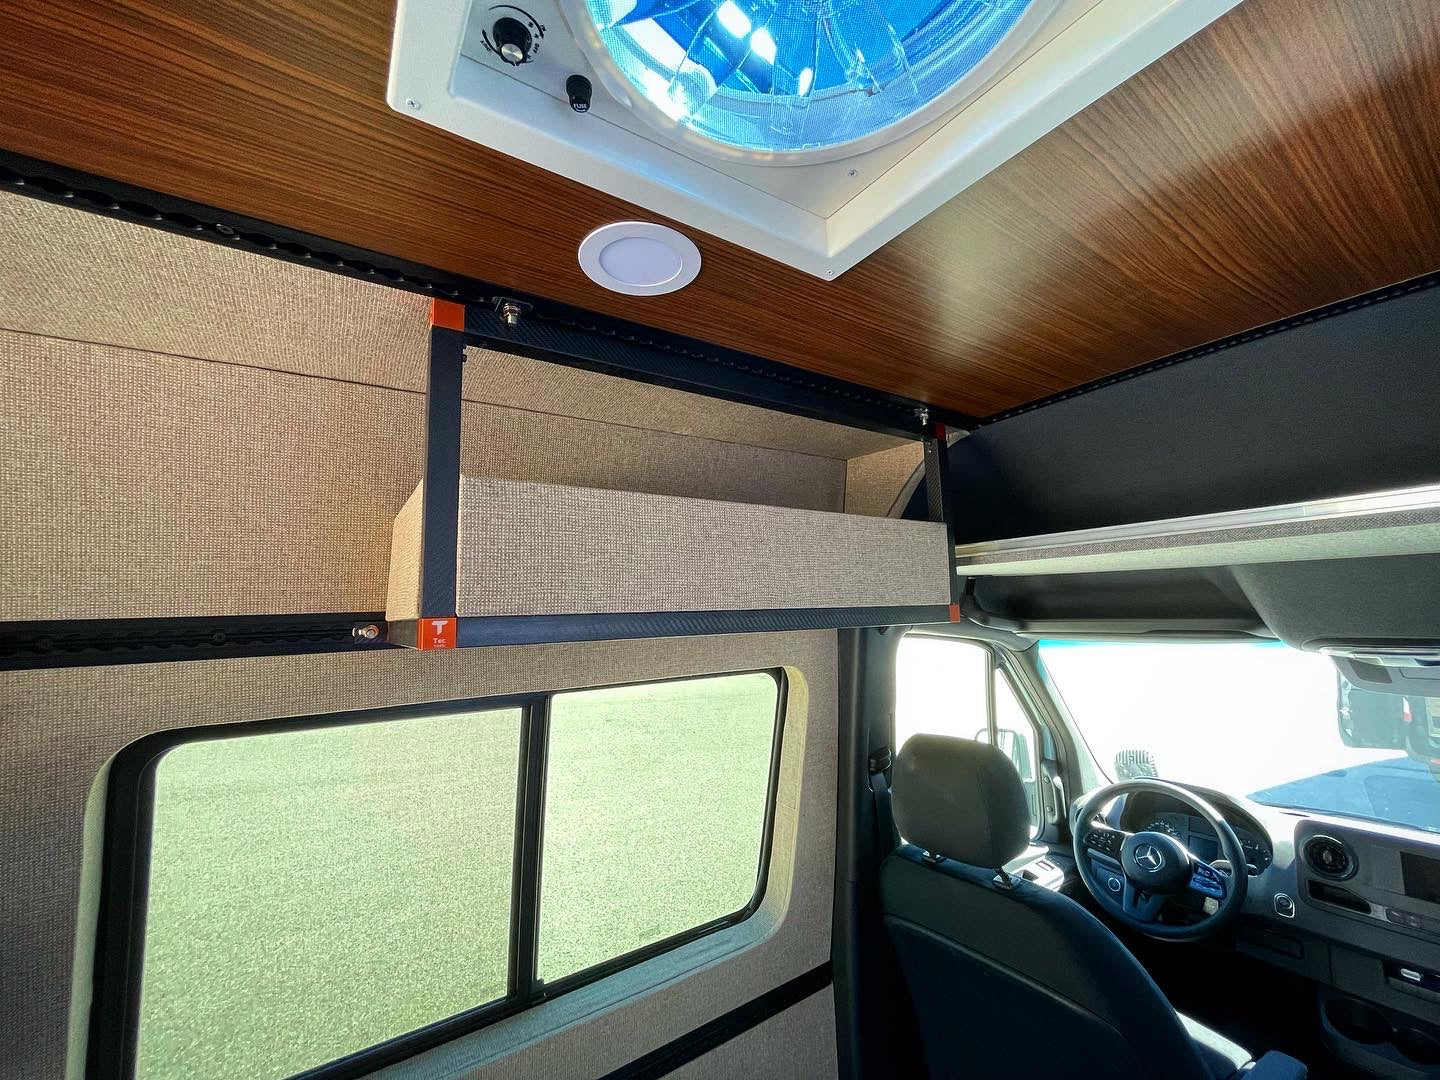 Sprinter / Transit Van Conversion Carbon Fiber 34" Upper Cabinet | Light Weight.